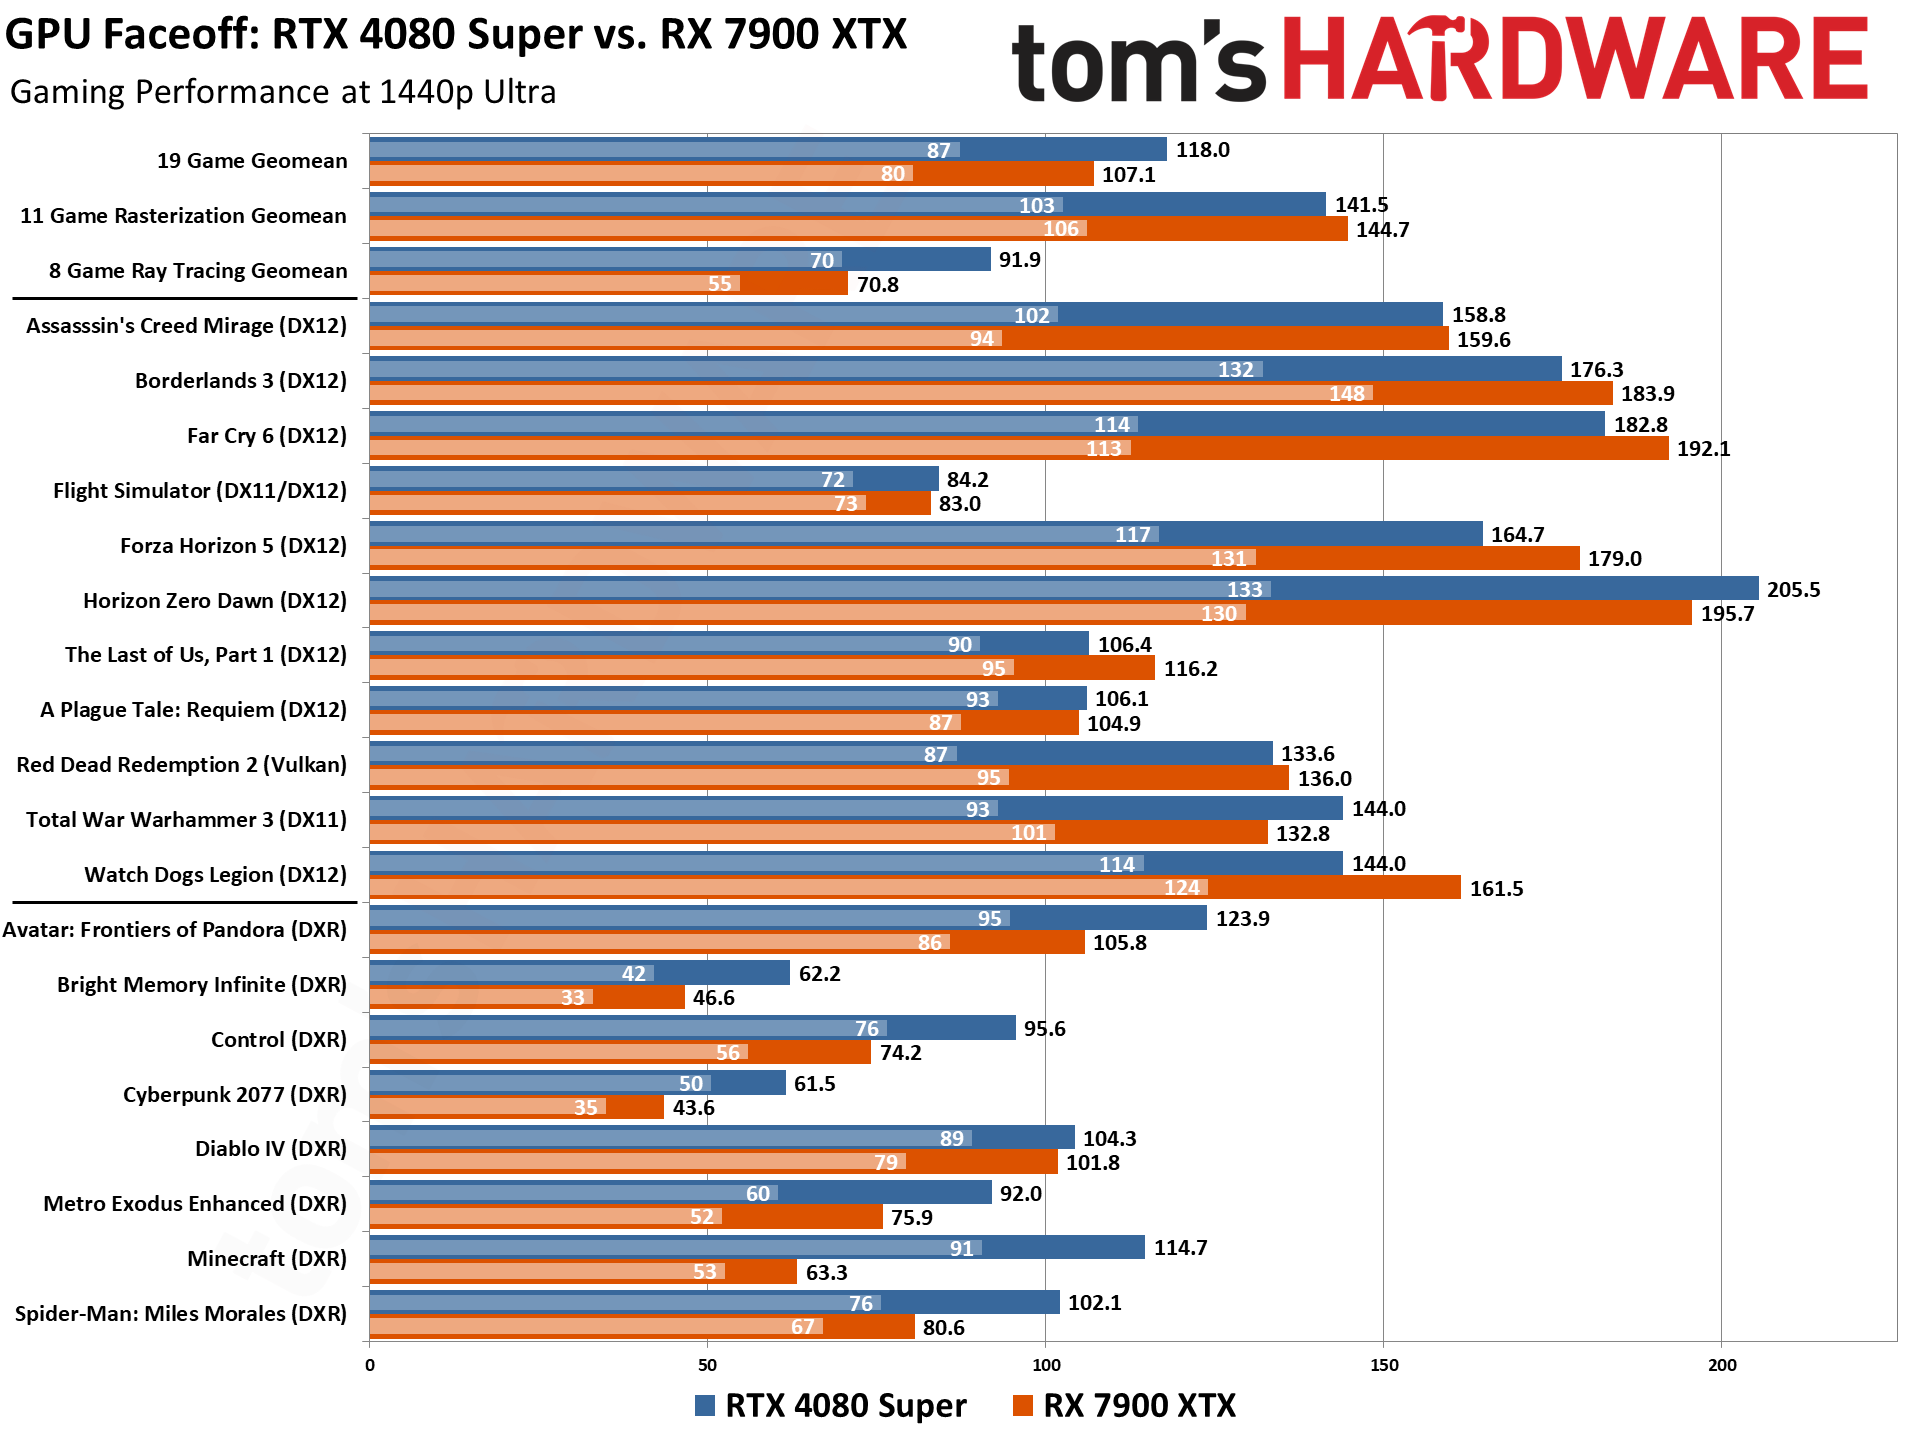 RTX 4080 Super vs RX 7900 XTX Benchmarks